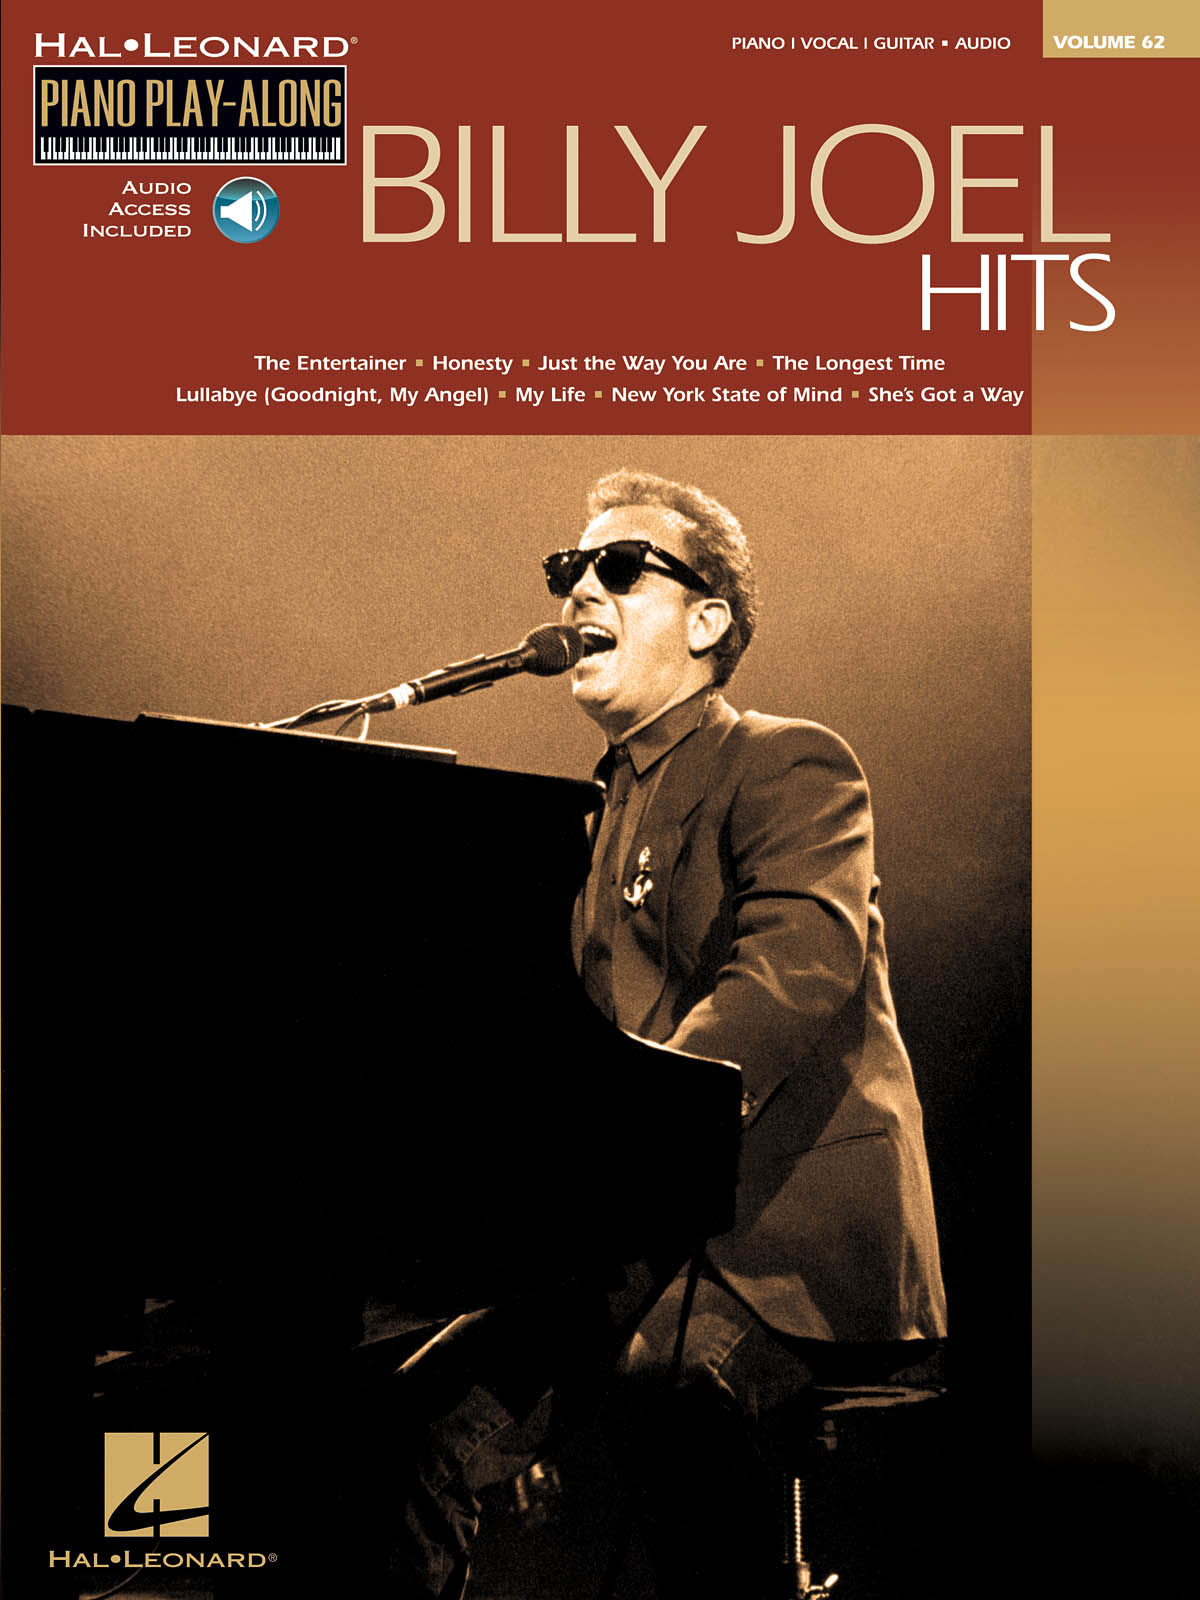 HAL LEONARD PIANO PLAY ALONG VOLUME 62 - BILLY JOEL HITS + AUDIO EN LIGNE - PVG